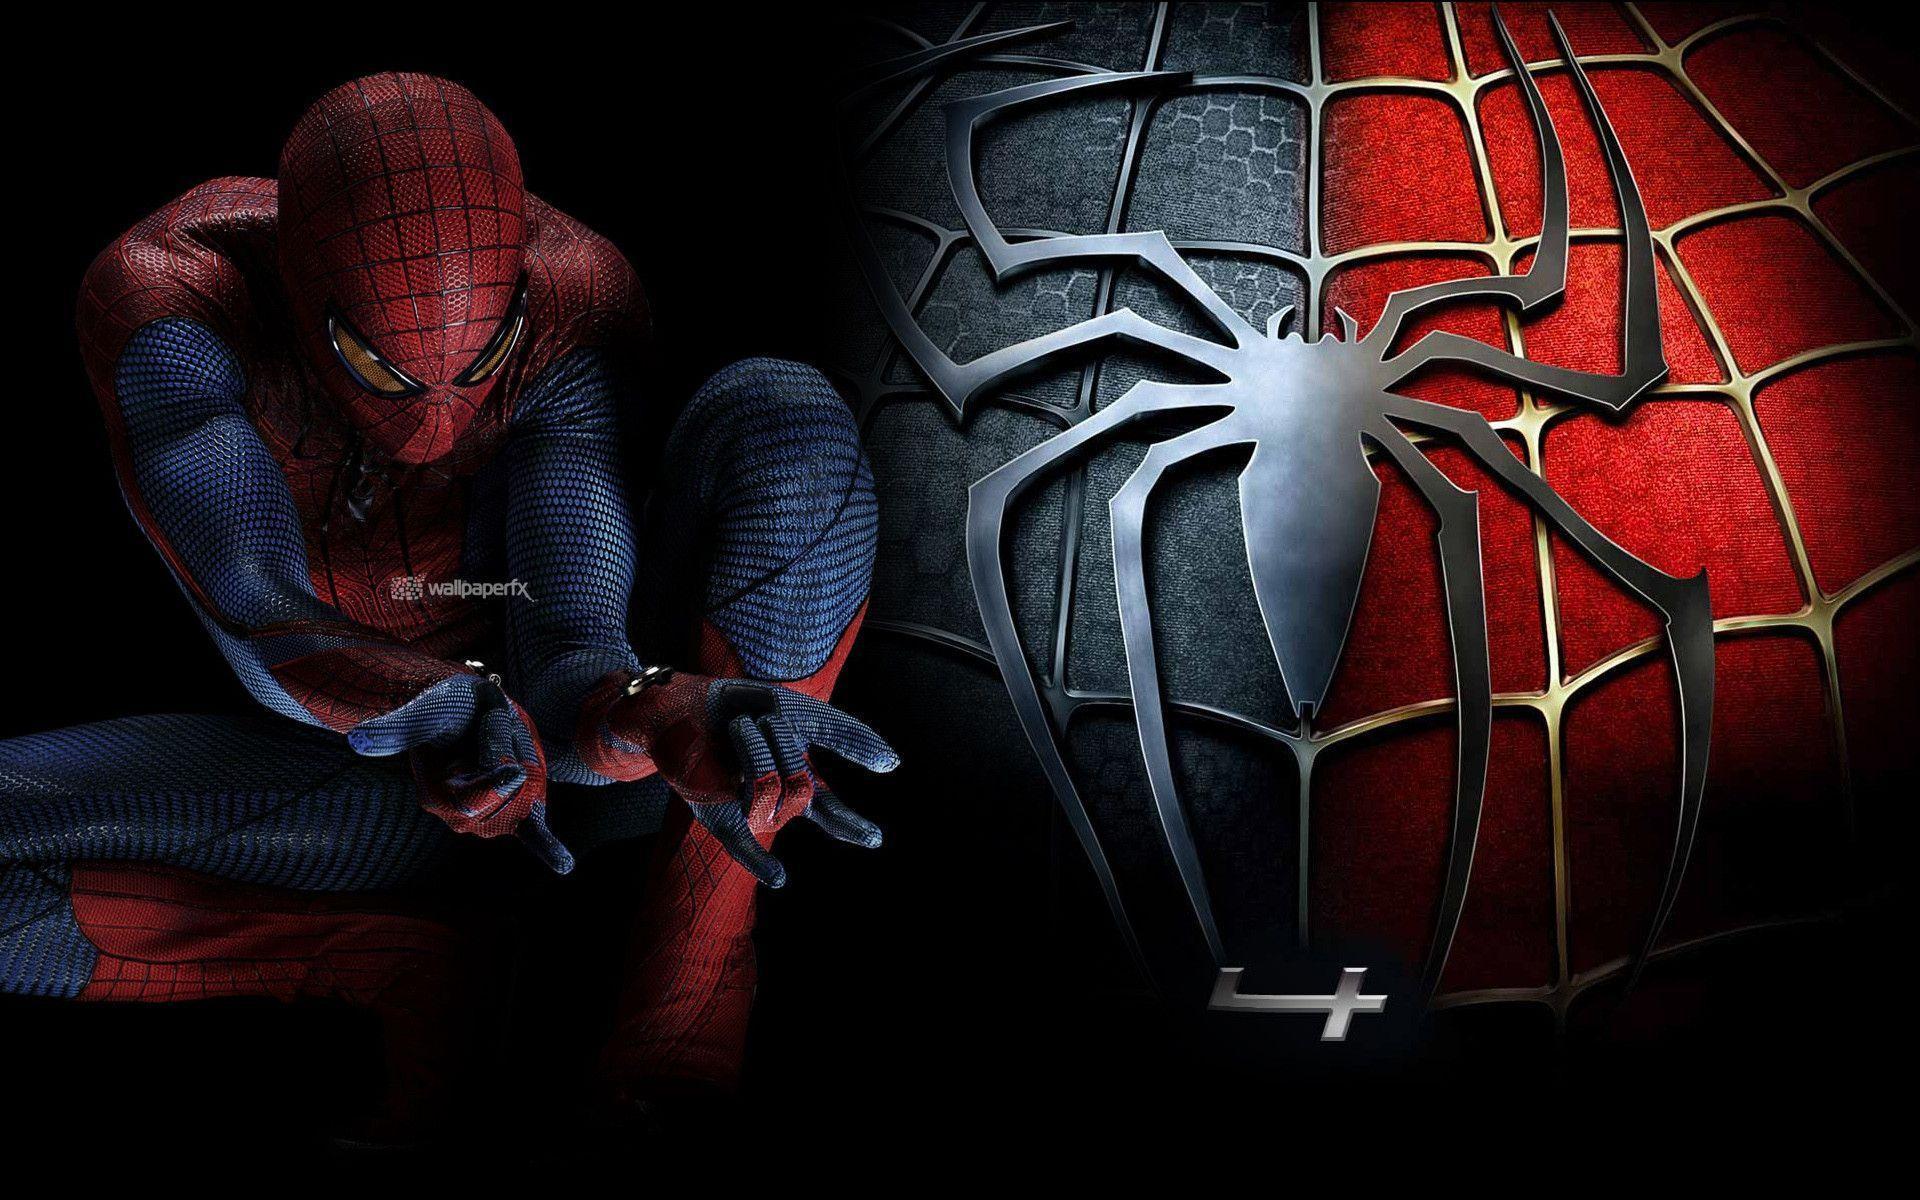 Spiderman 4 Wallpaper